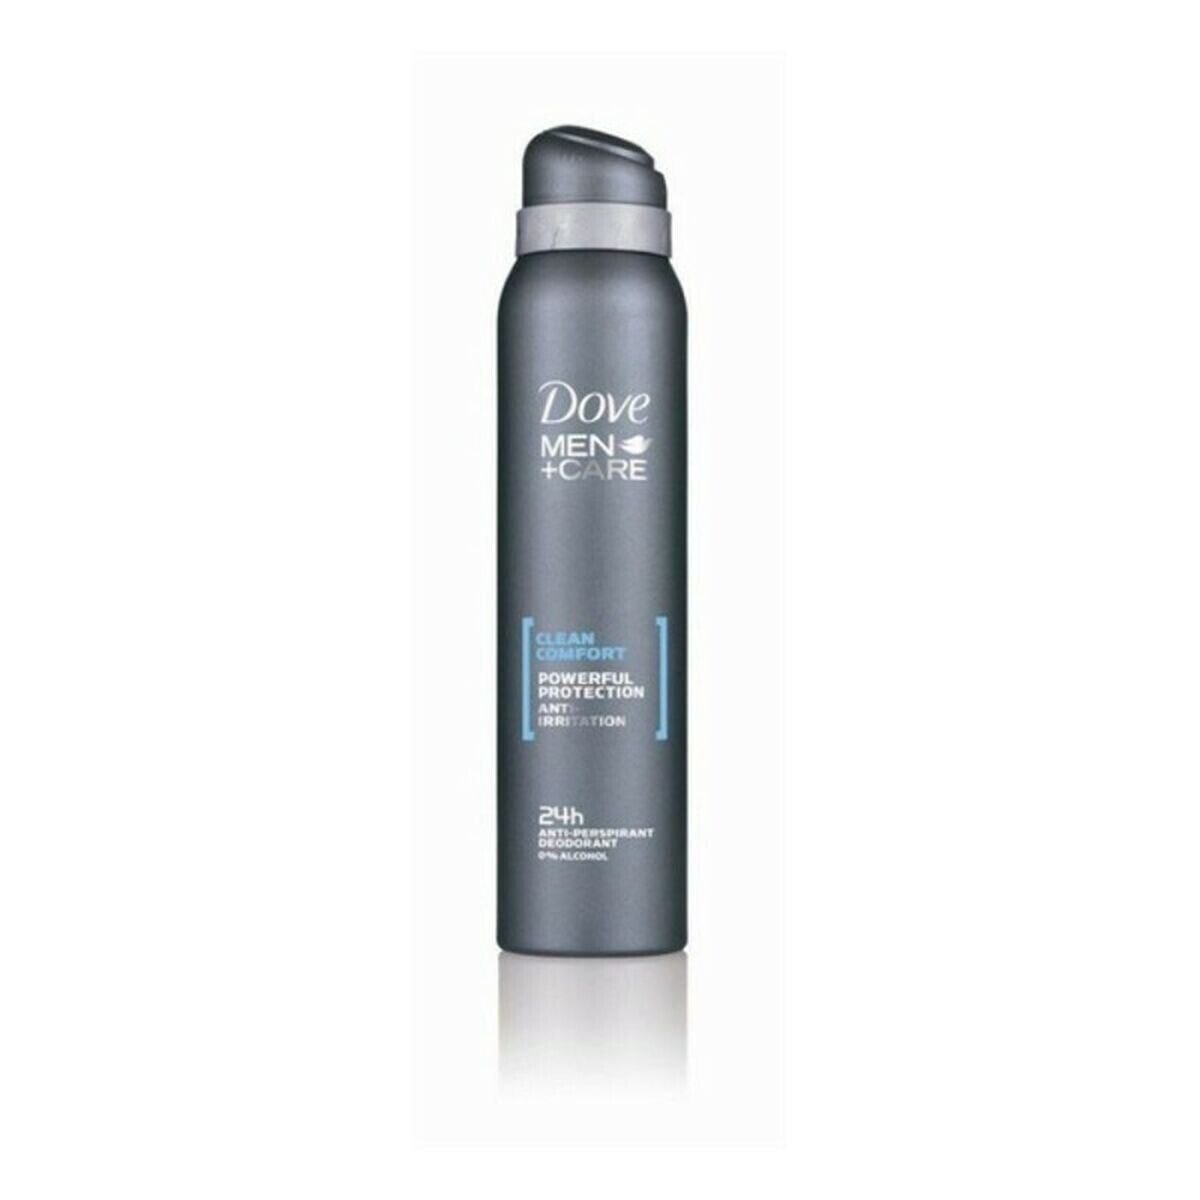 Дезодорант-спрей Men Clean Confort Dove Men Clean Comfort (200 ml) 200 ml